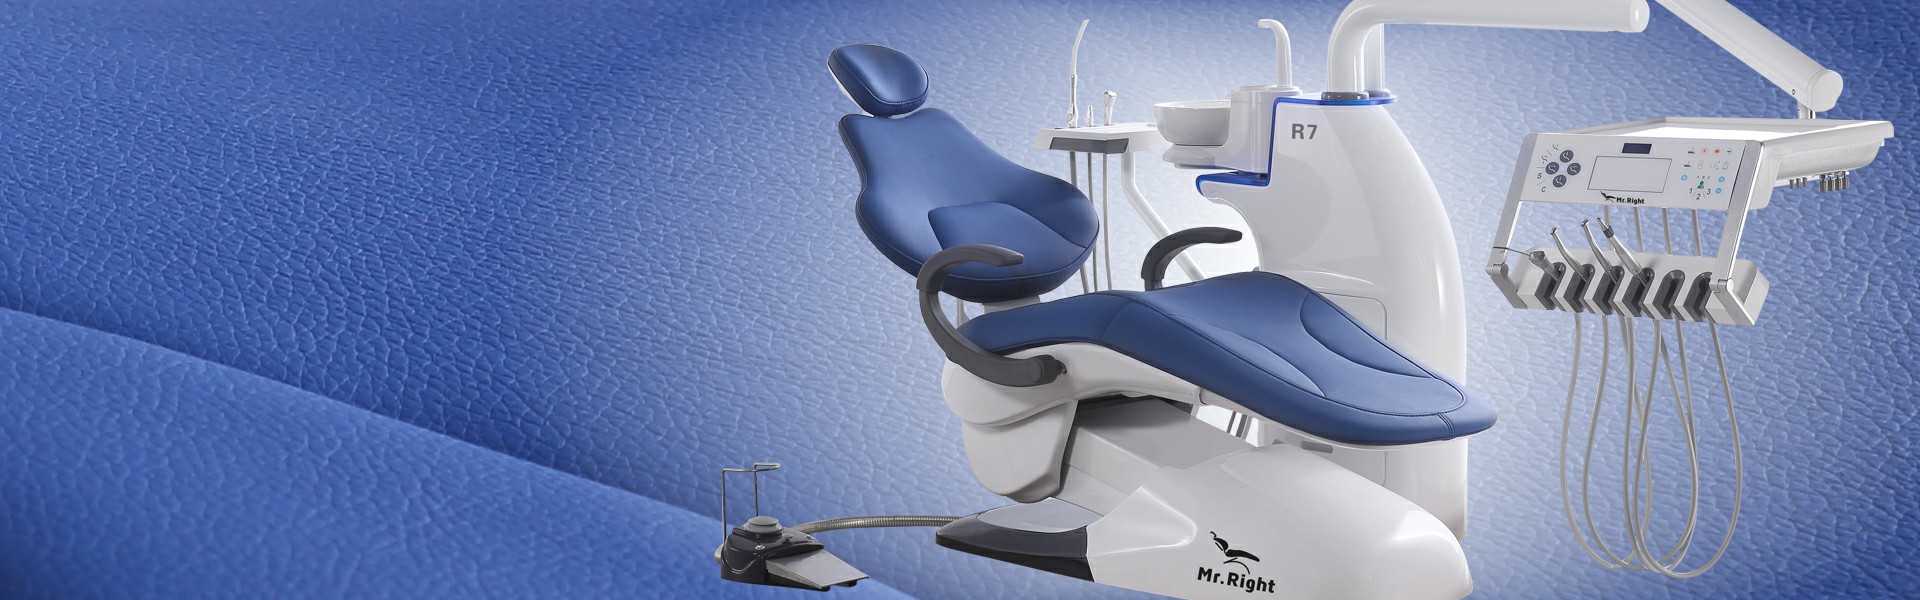 Online Dental Chairs Dental Equipment Dental Supplies Treedental